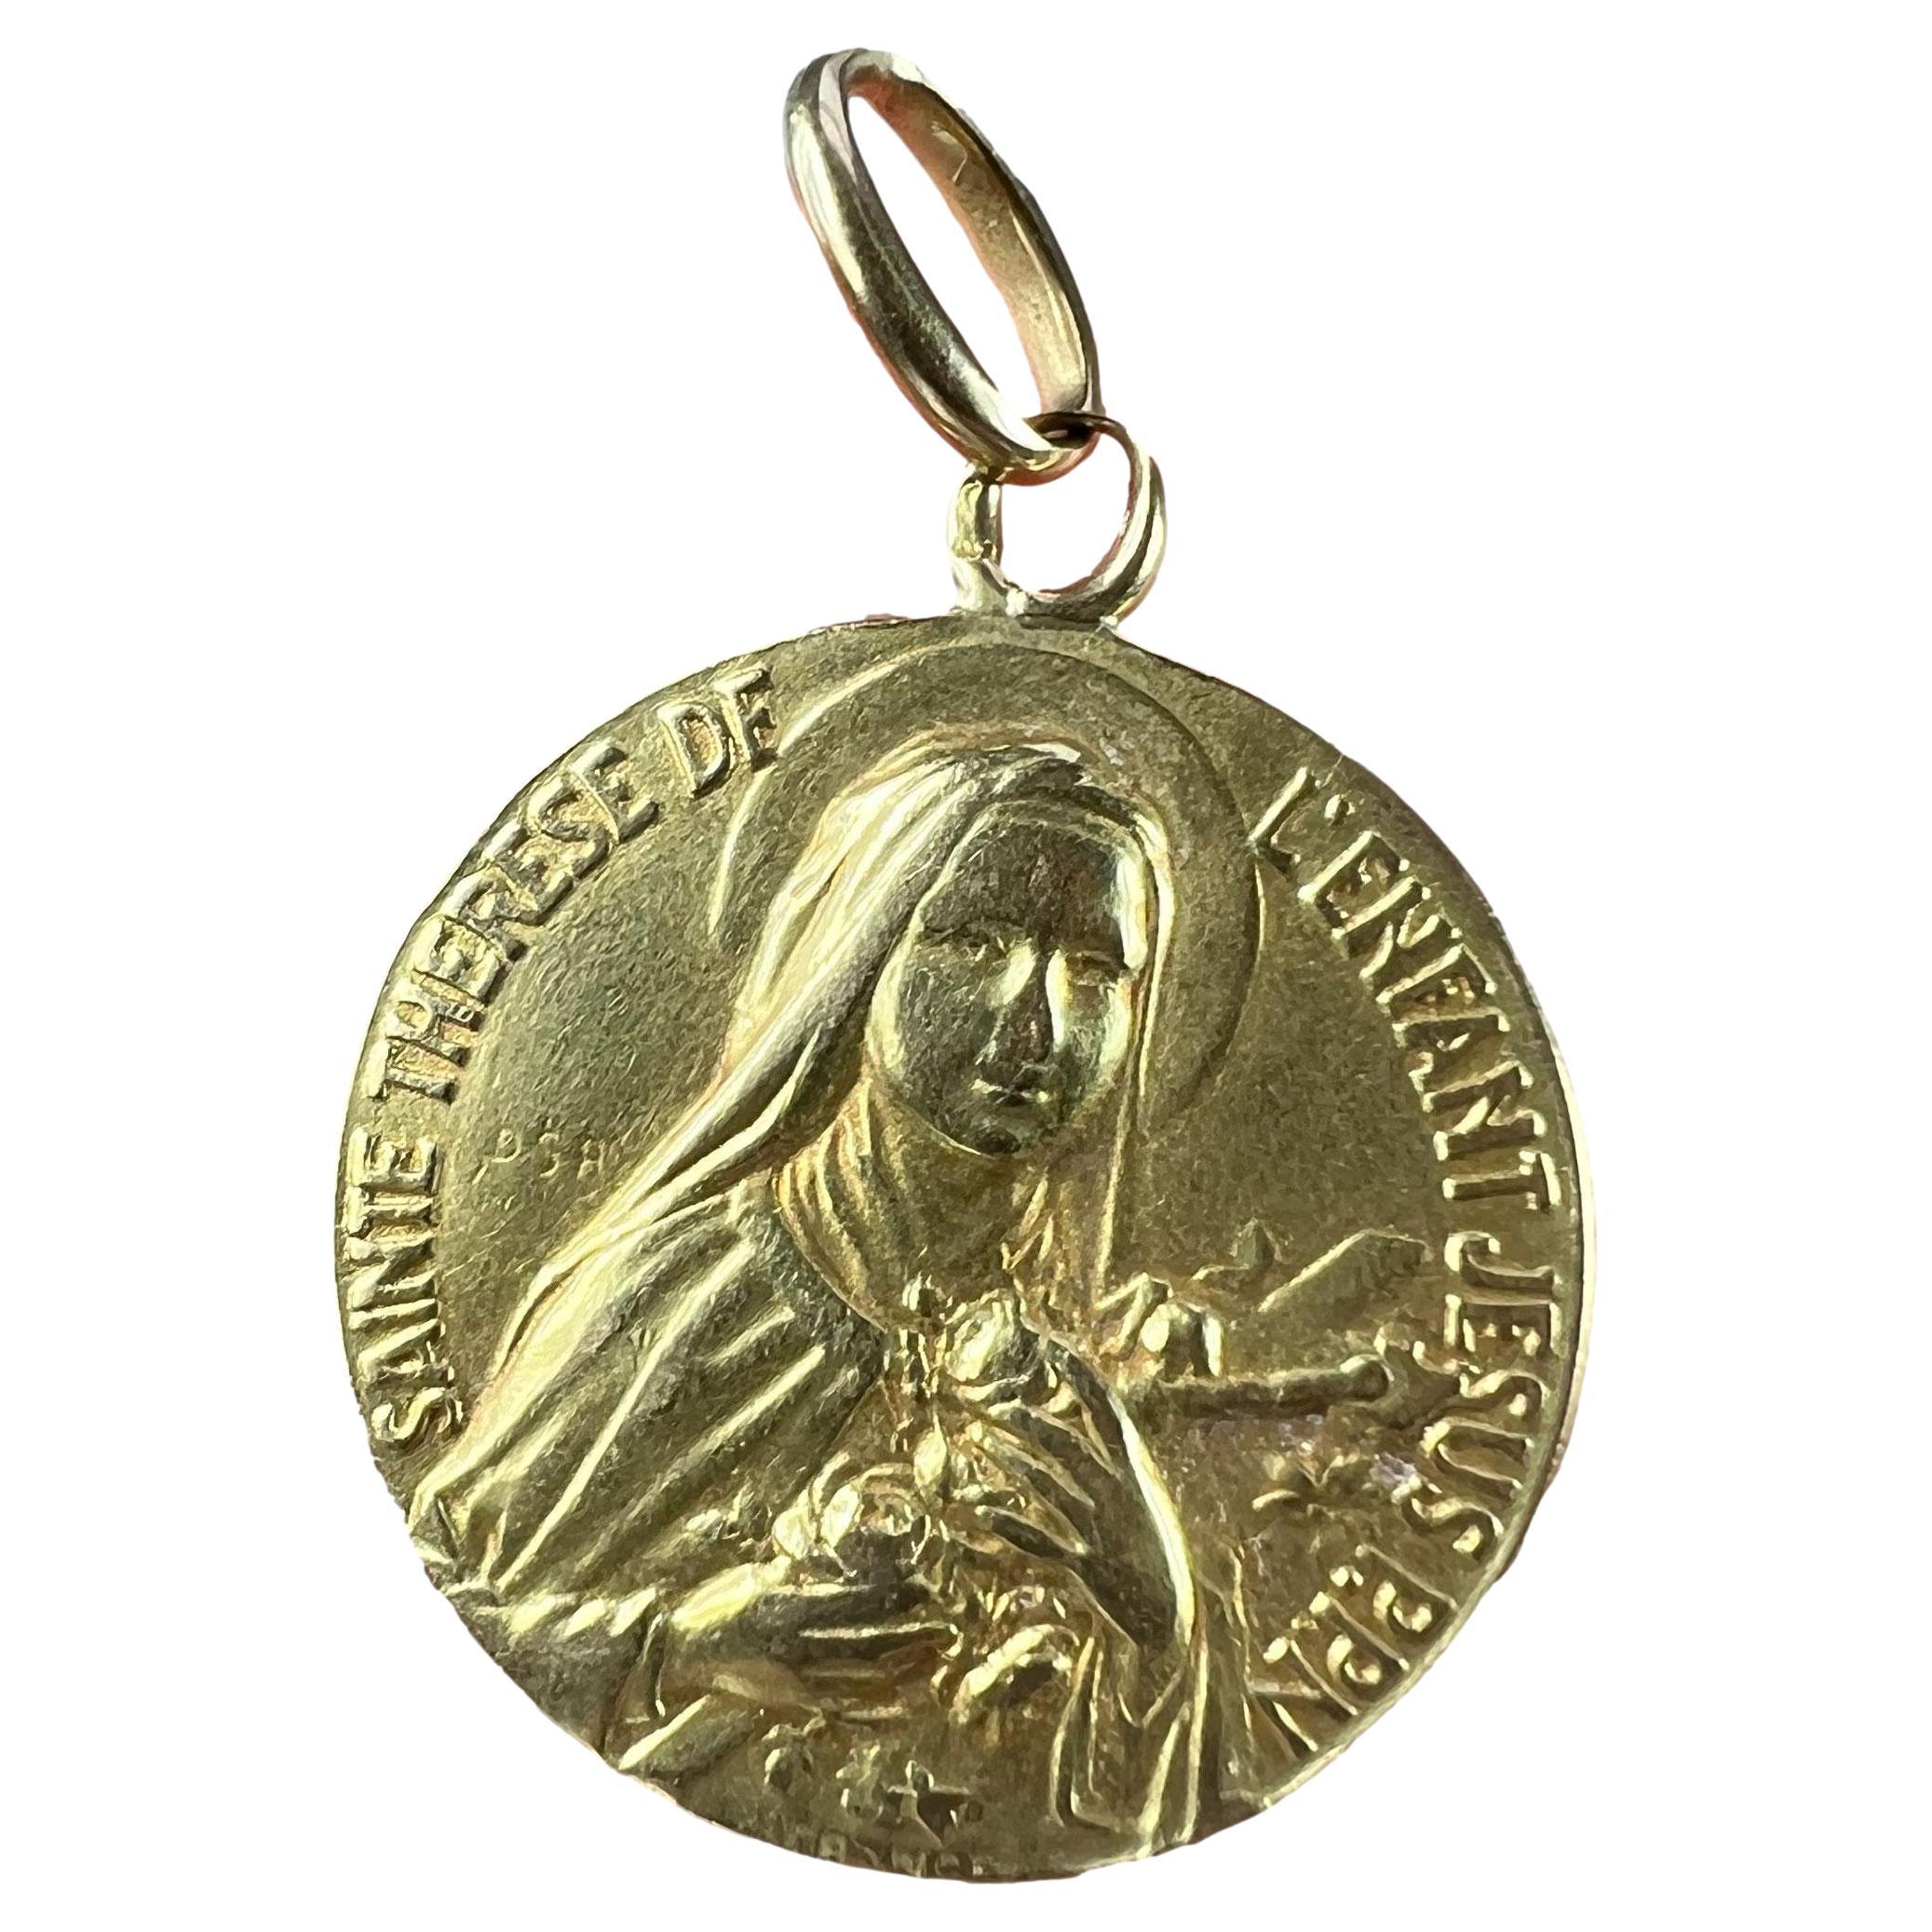 St Therese, médaille religieuse française en or jaune 18 carats